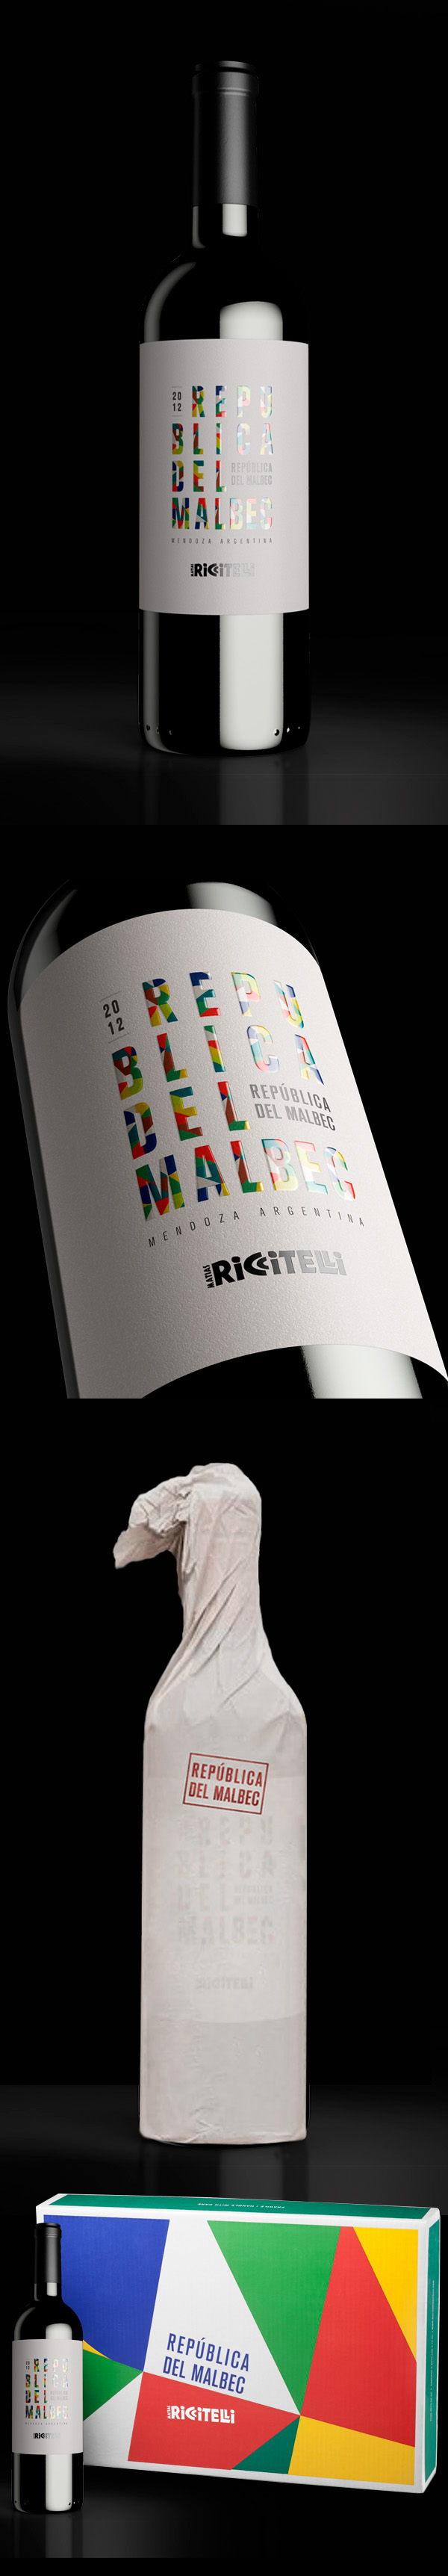 wine Riccitelli argentina republica sudamerica wine label vino Malbec mendoza colors lettering etiqueta